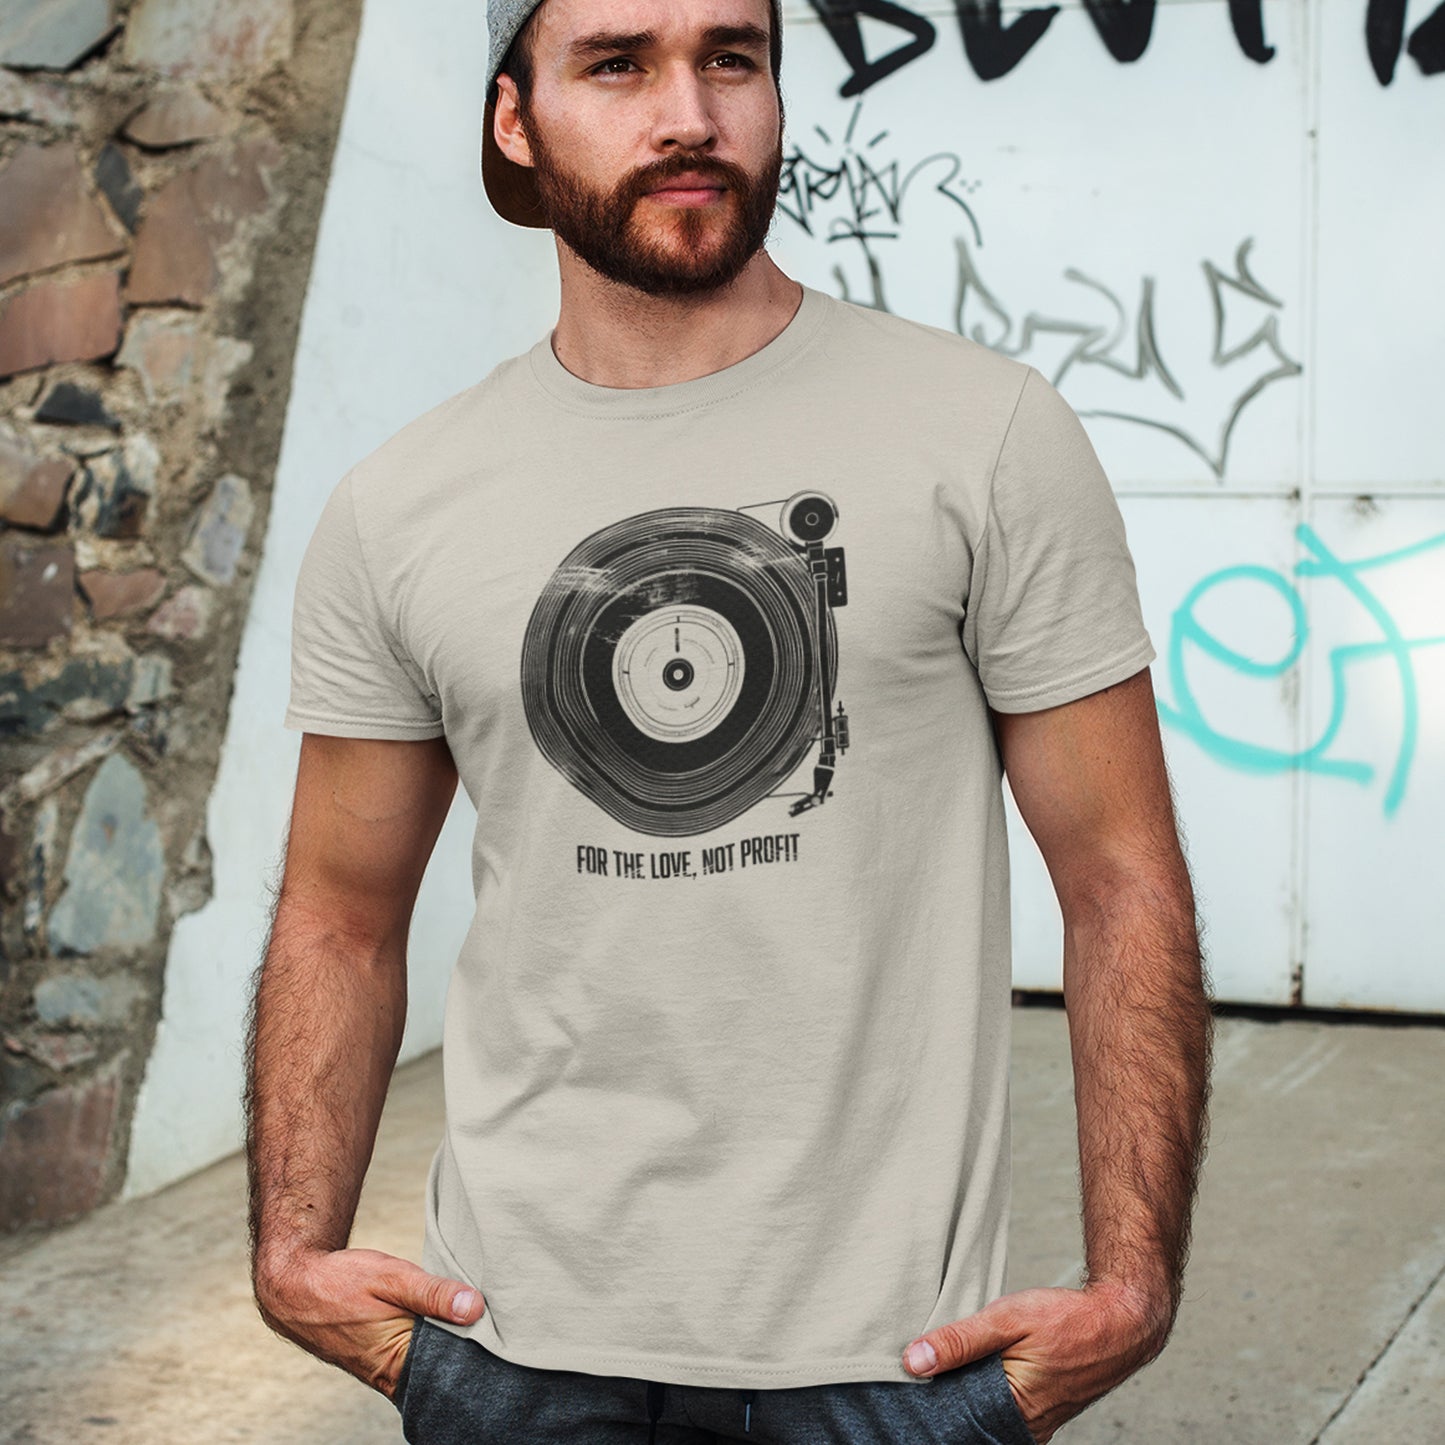 For The Love Unisex t-shirt- desert dust- worn by male model outdoors